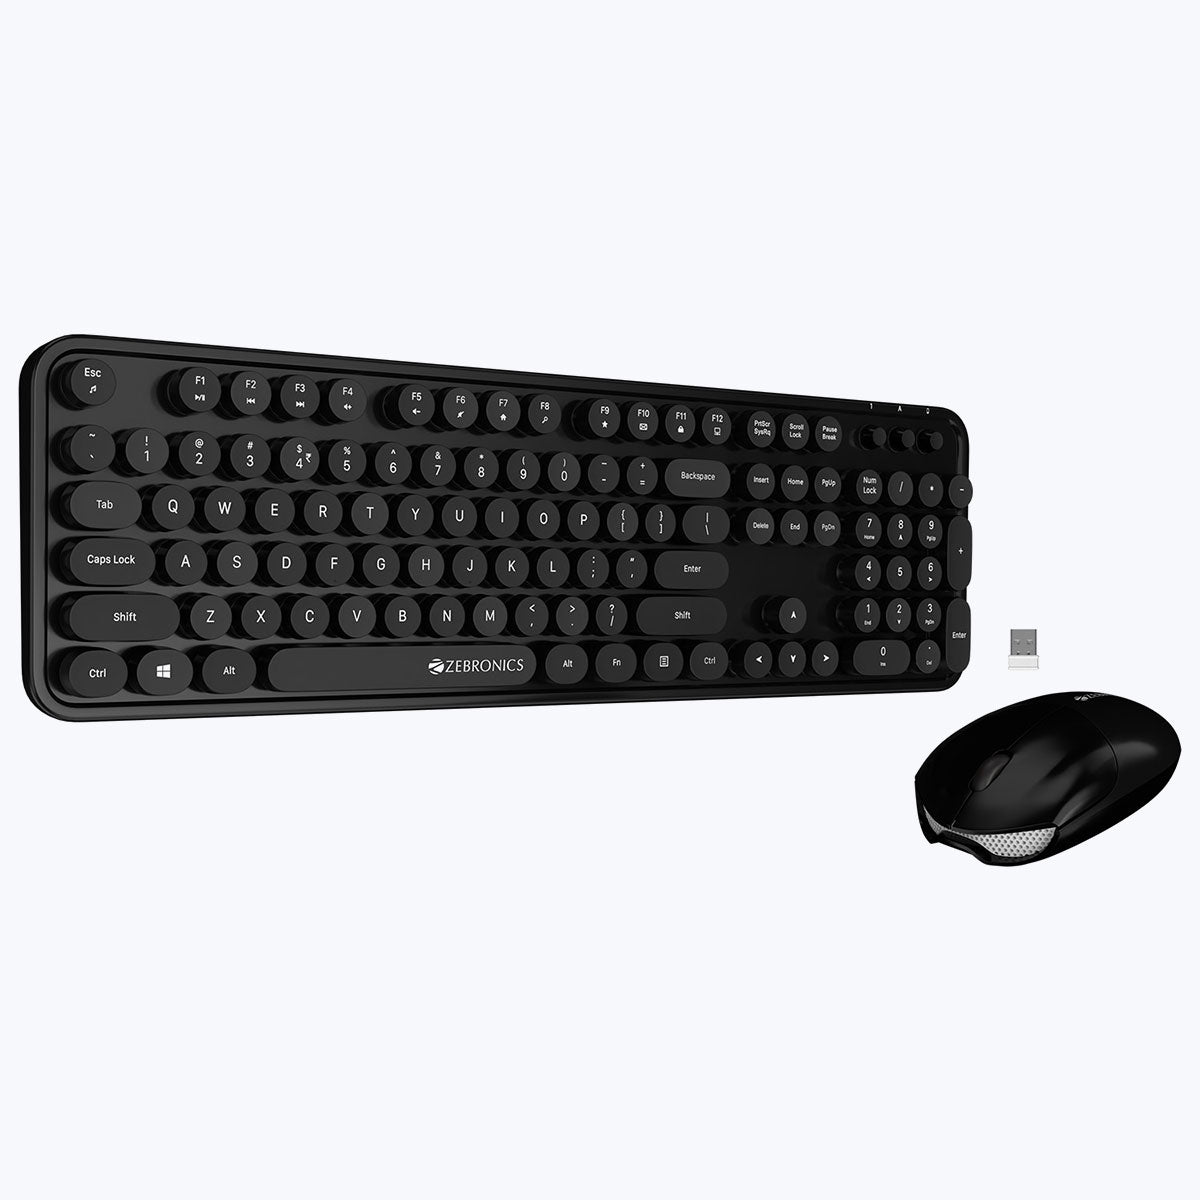 Zeb-Companion 300 - Wireless Keyboard and Mouse Combo - Zebronics